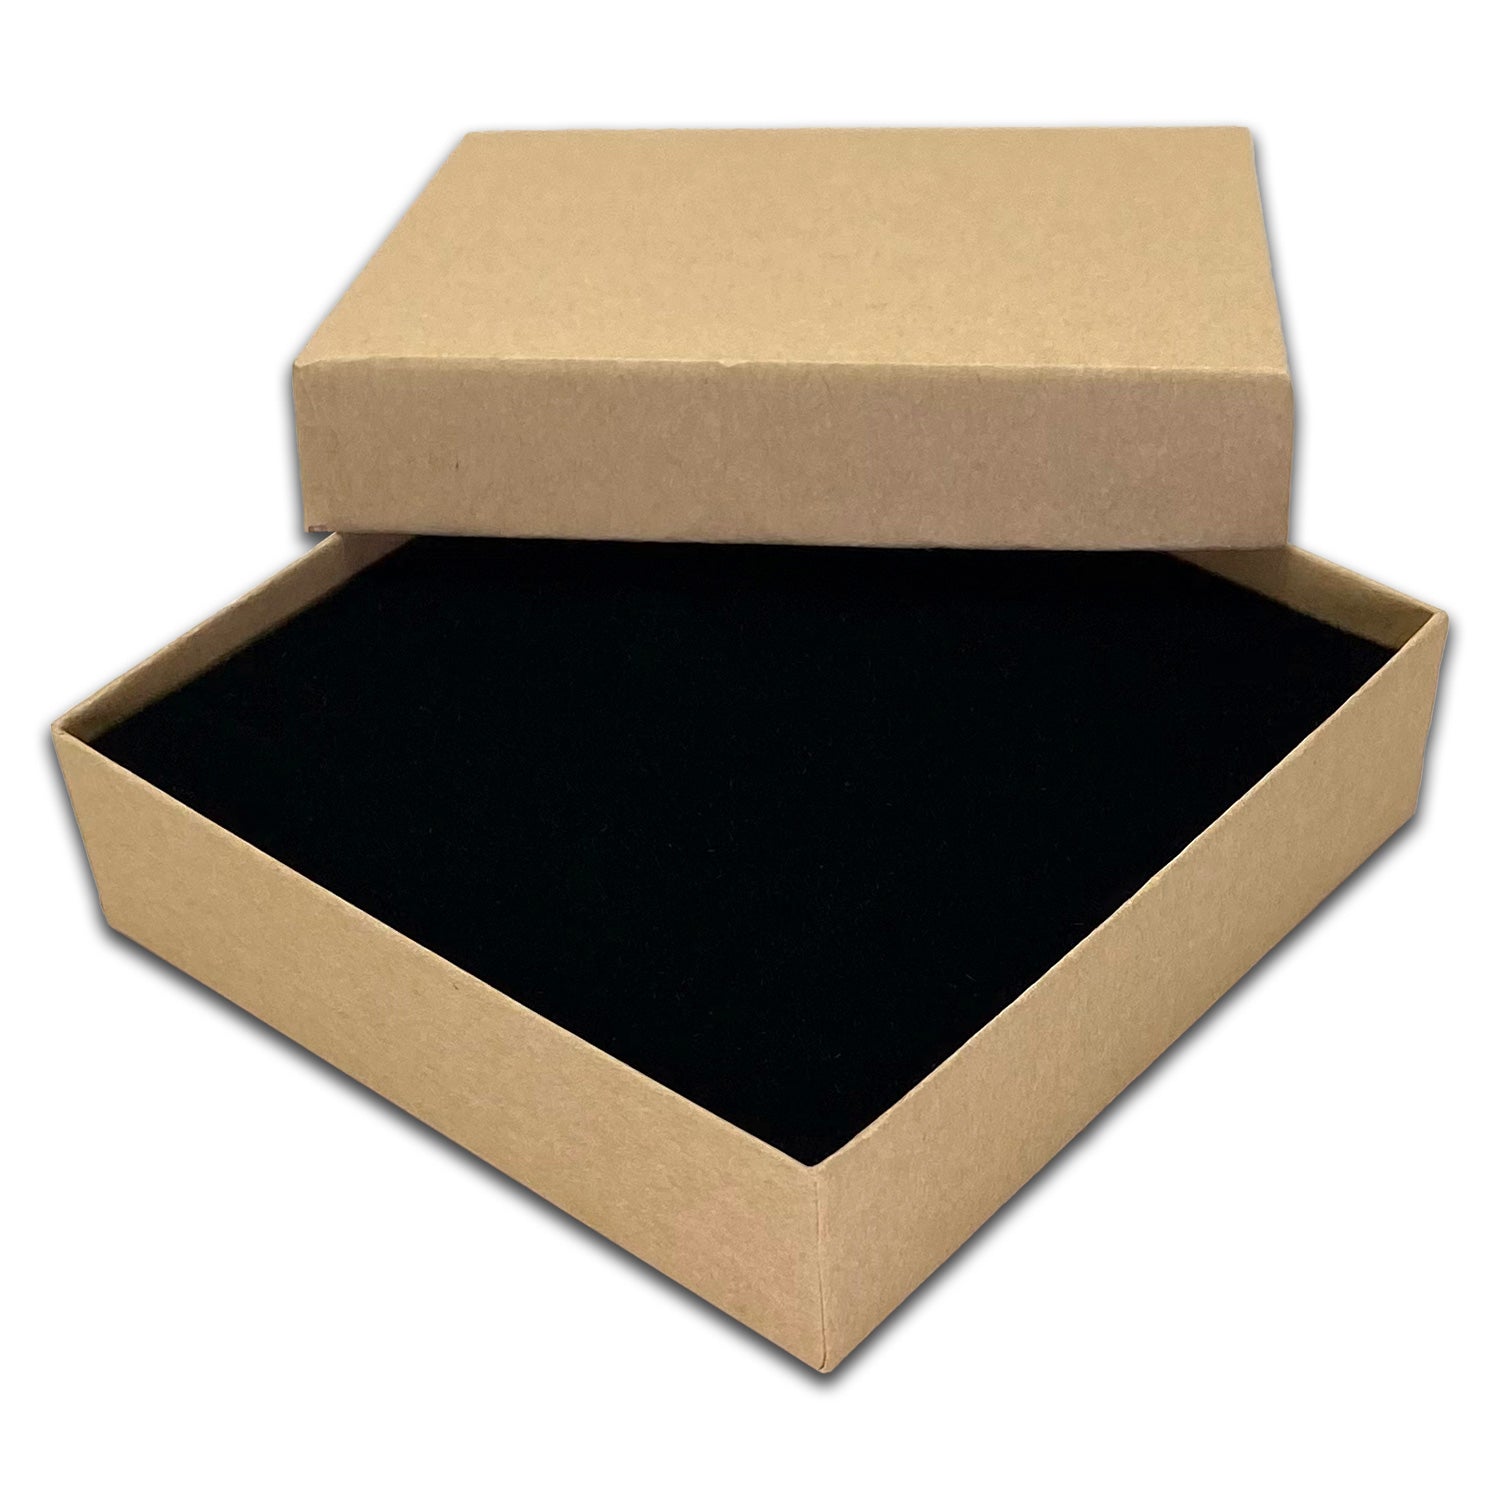 3 1/2" x 3 1/2" Kraft Pendant Necklace Paper Box with Black Foam Insert